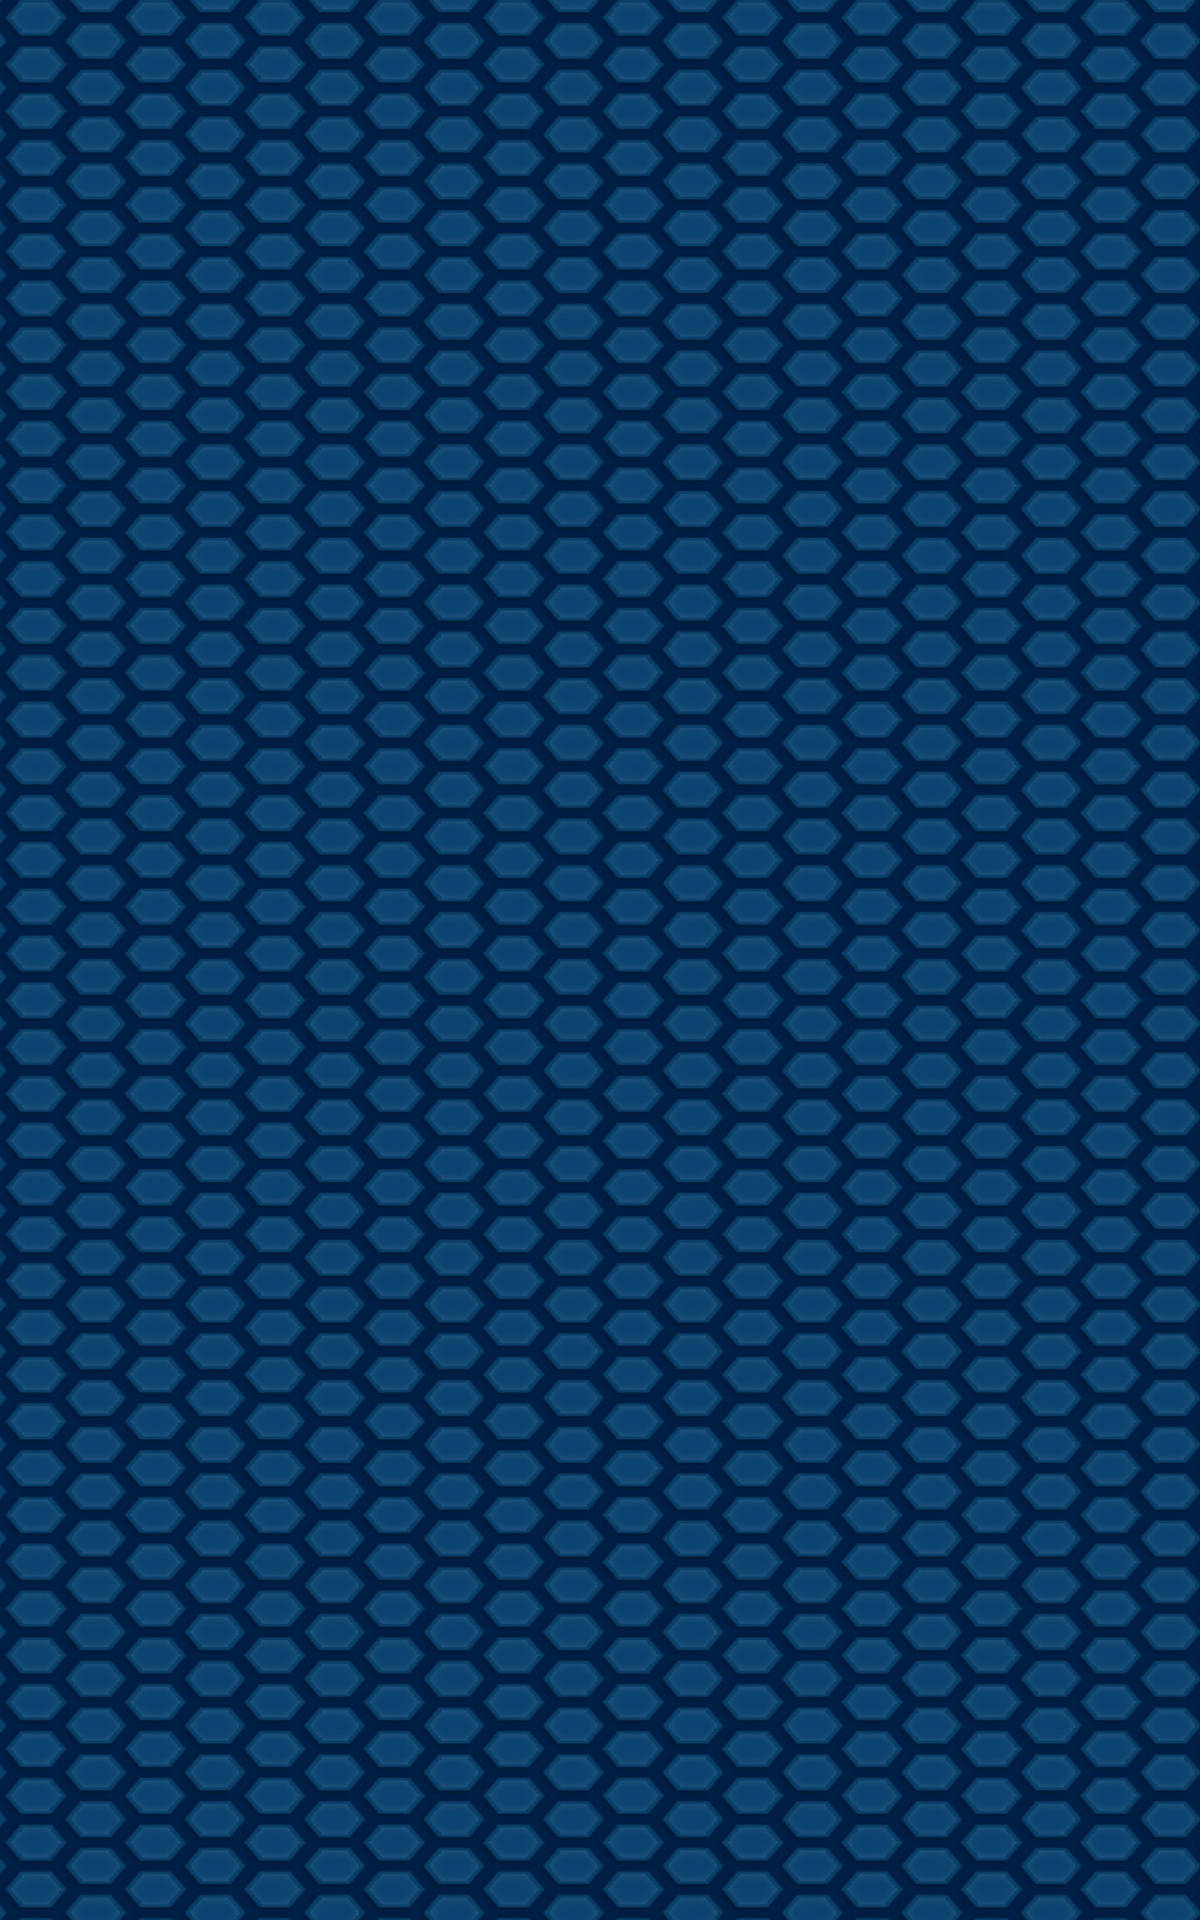 Plain Blue Honeycomb Design Background